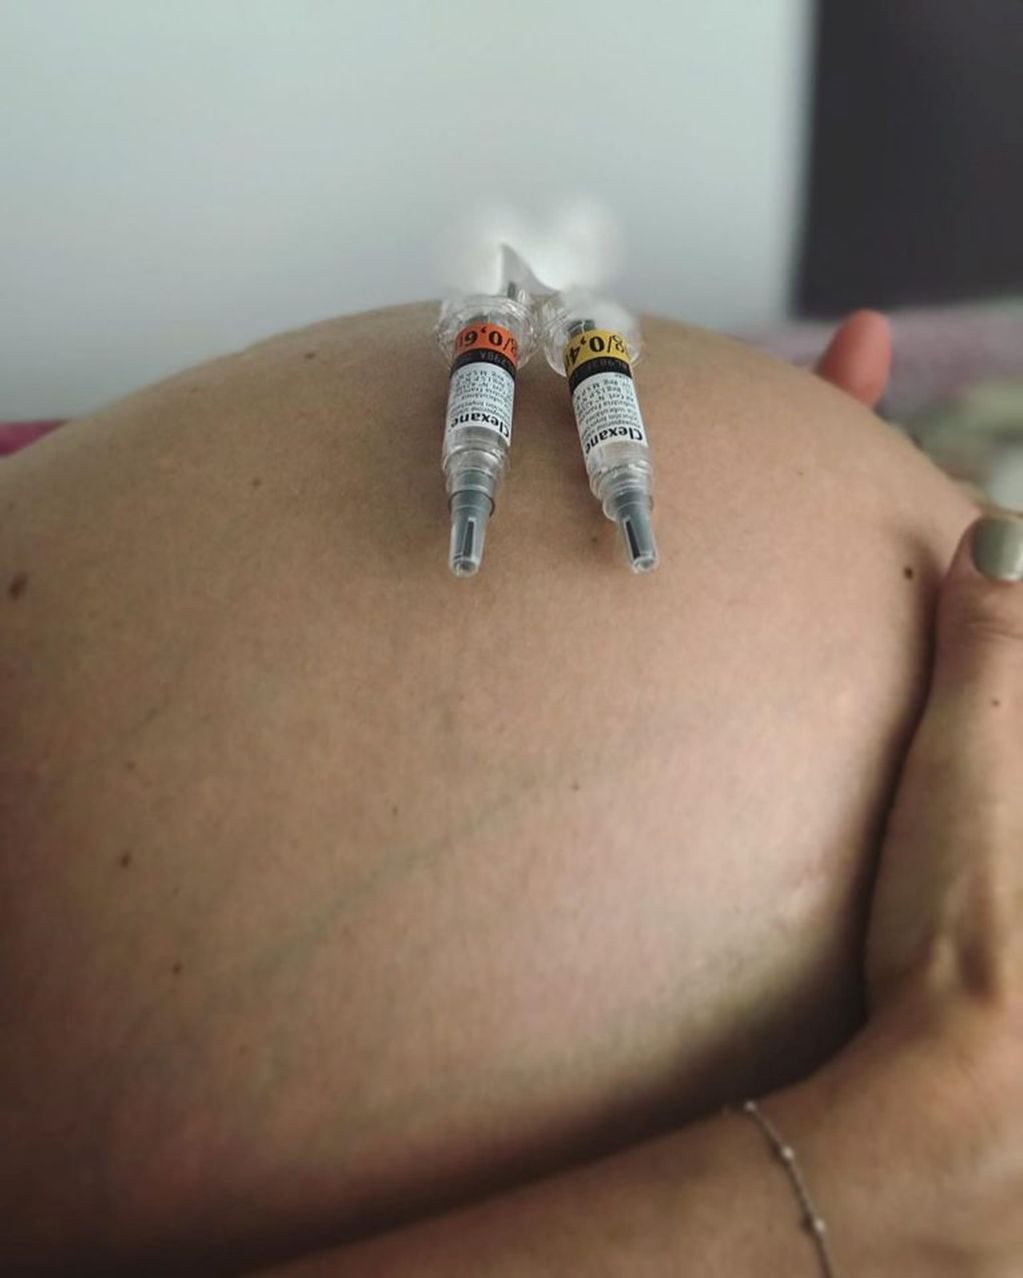 Eugenia Tobal tuvo 265 inyecciones durante su embarazo por la trombofilia (Foto: Instagram/ @eugeniatobal)